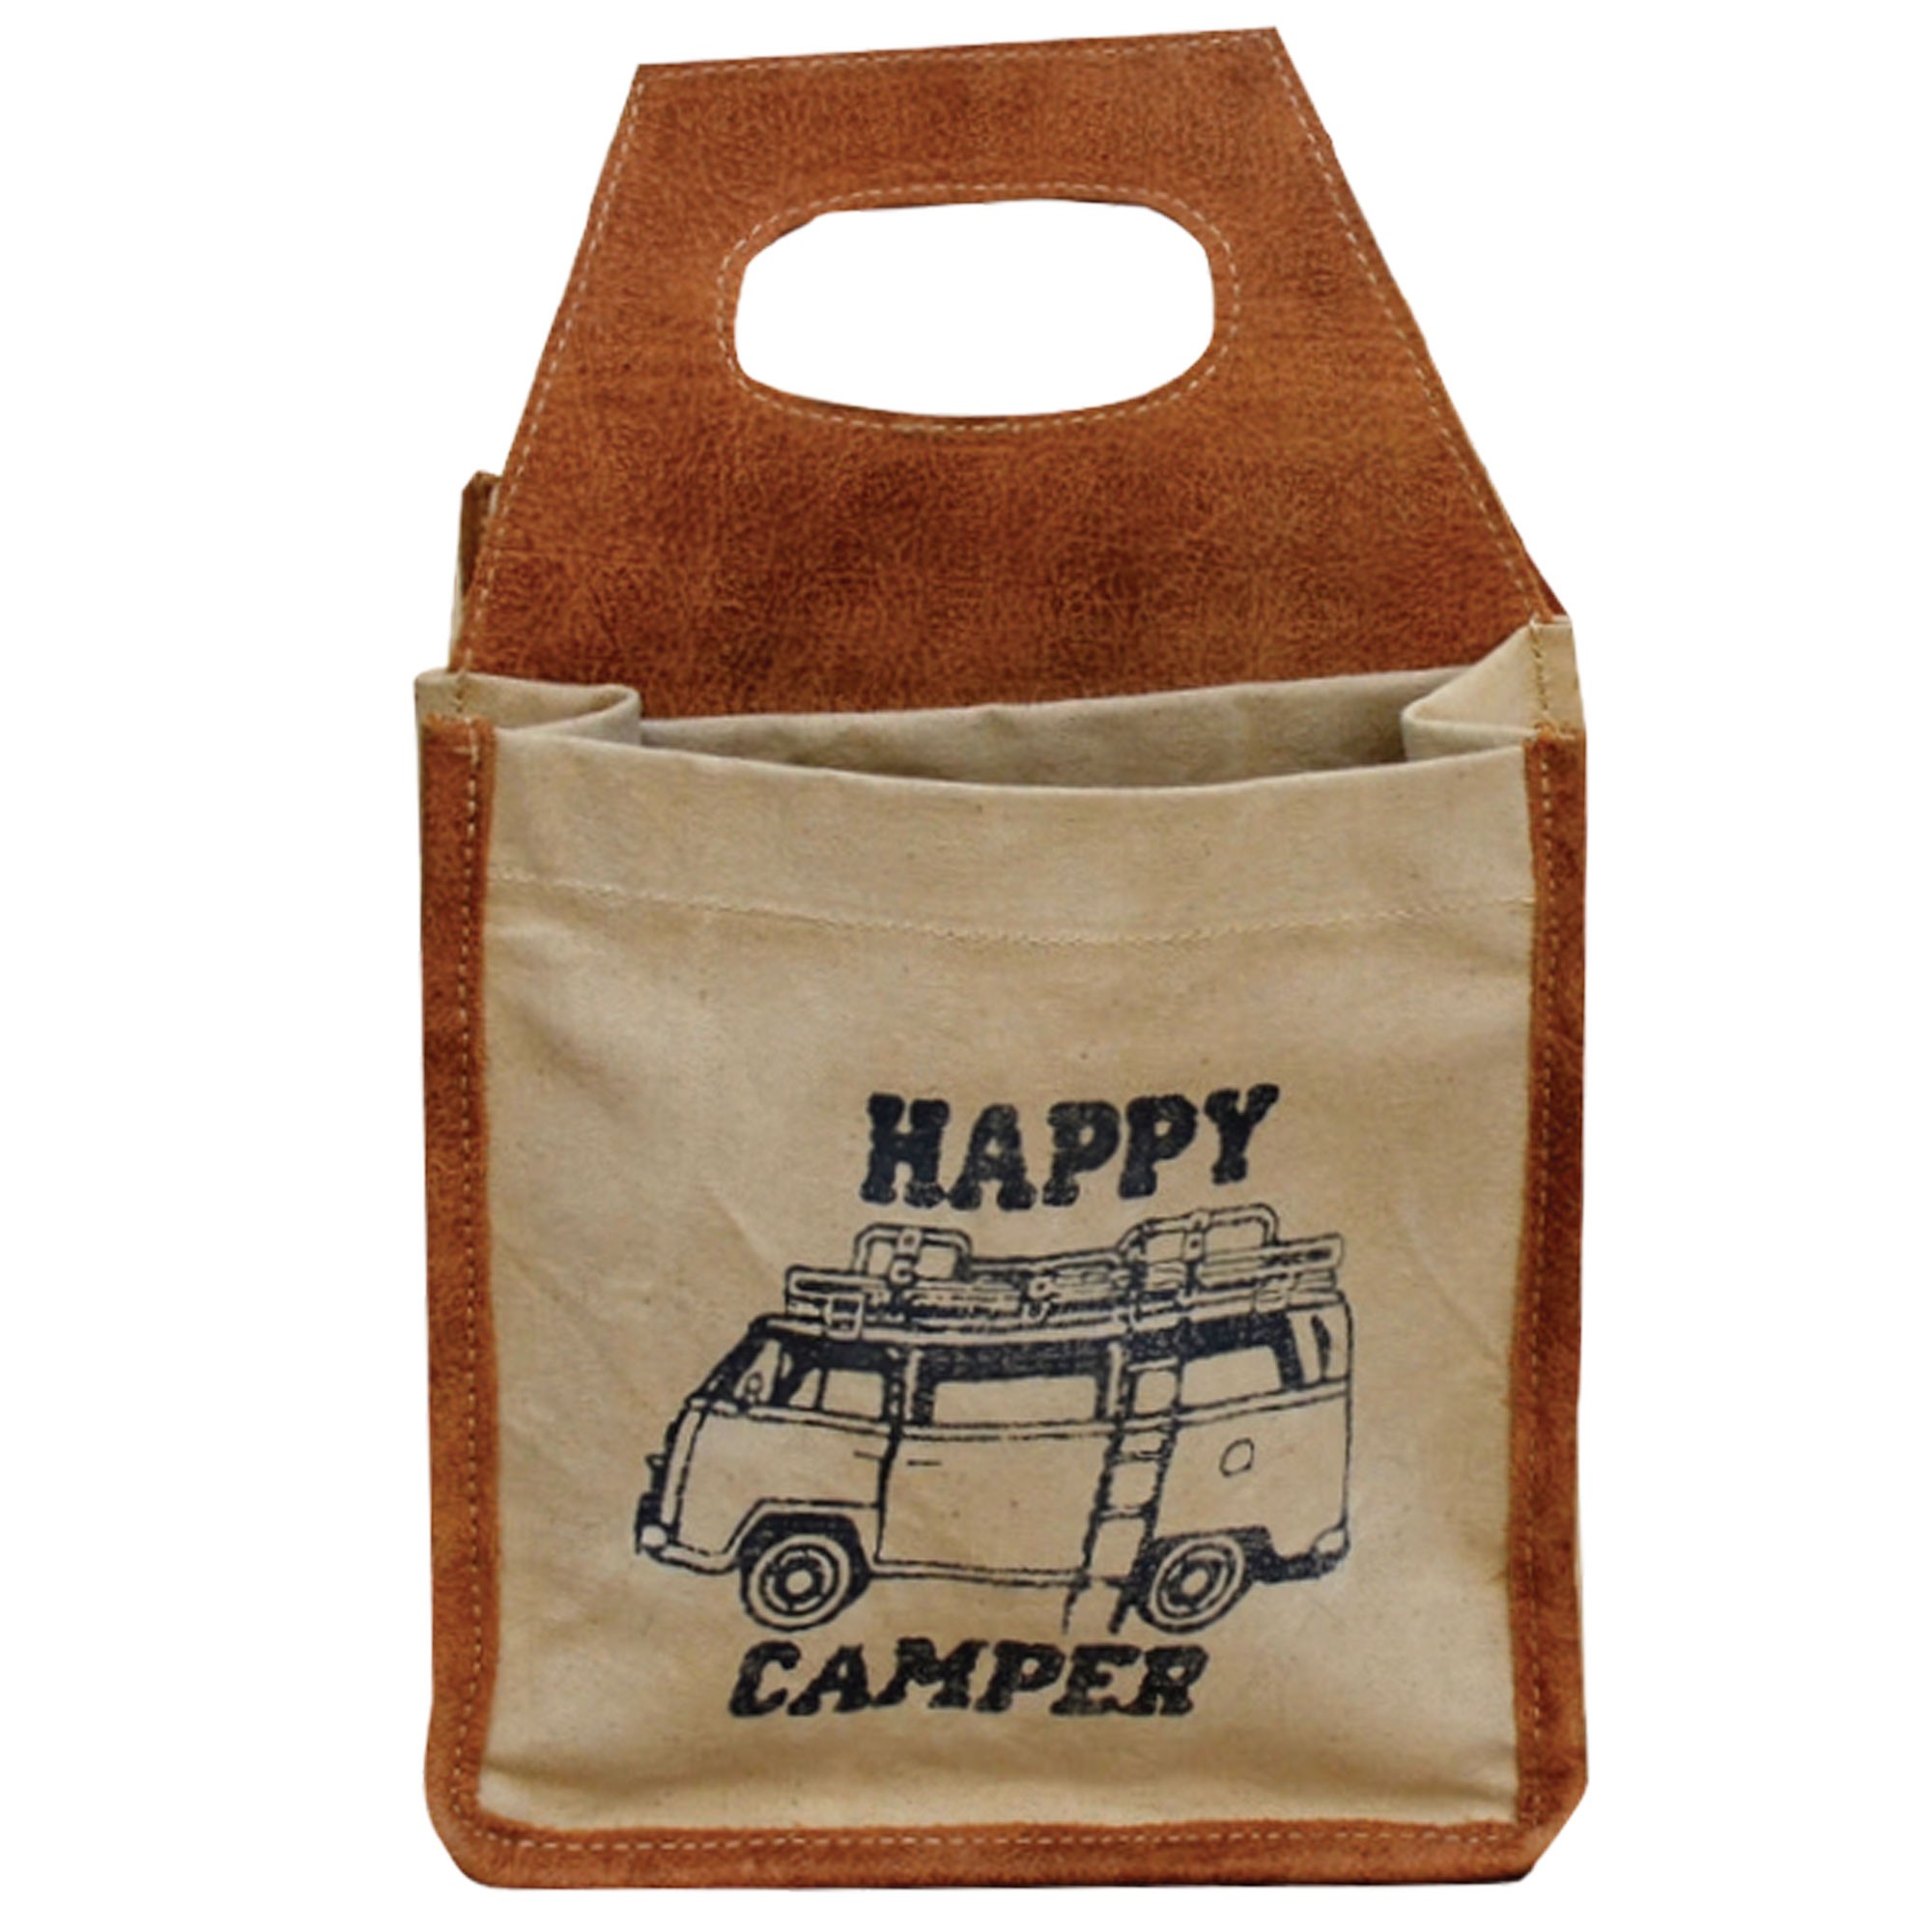 HAPPY CAMPER BEER CARRIER